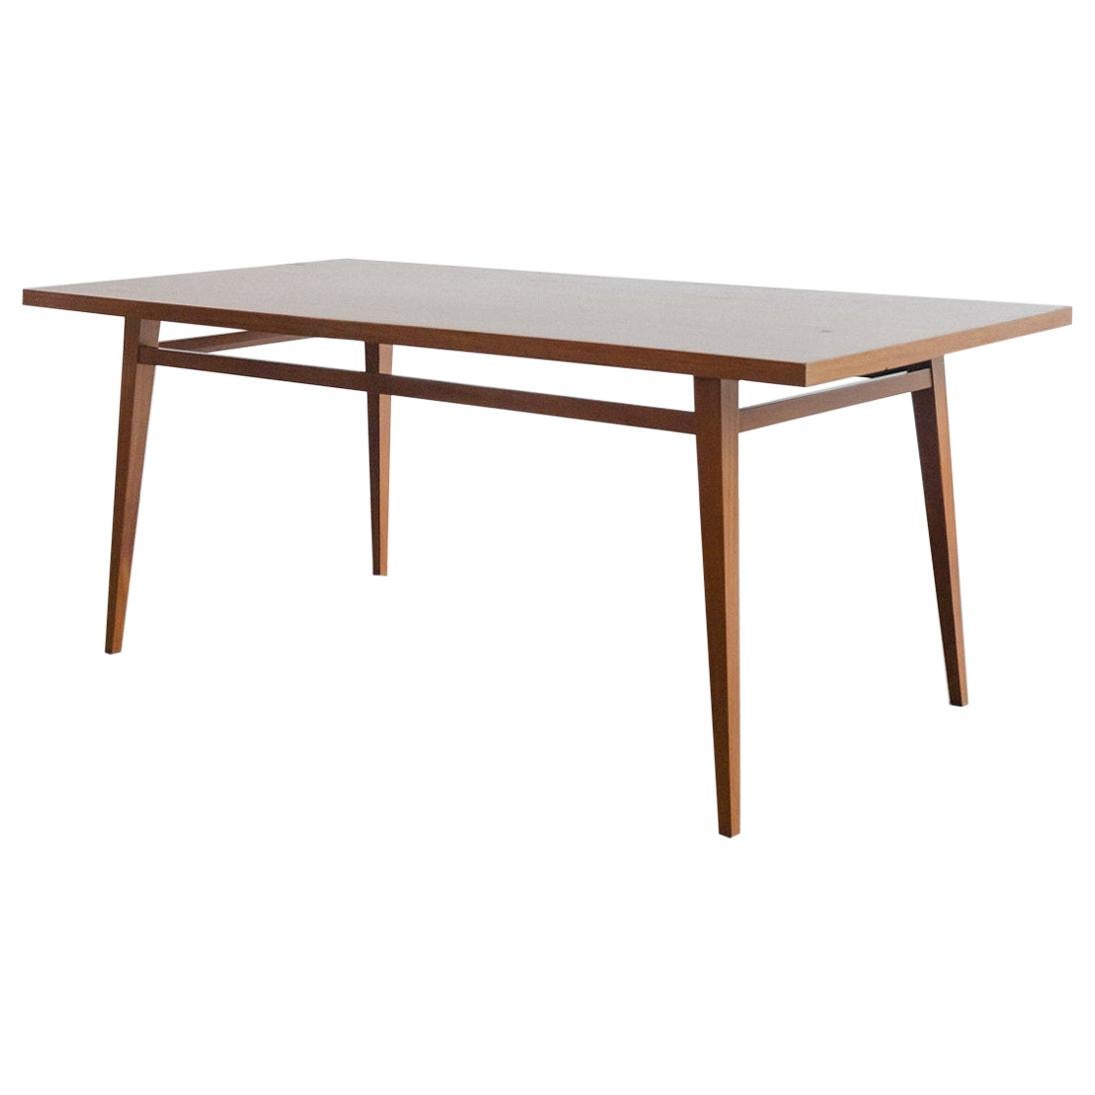 Brazilian Hardwood Table by Joaquim Tenreiro, 1947, Midcentury Design